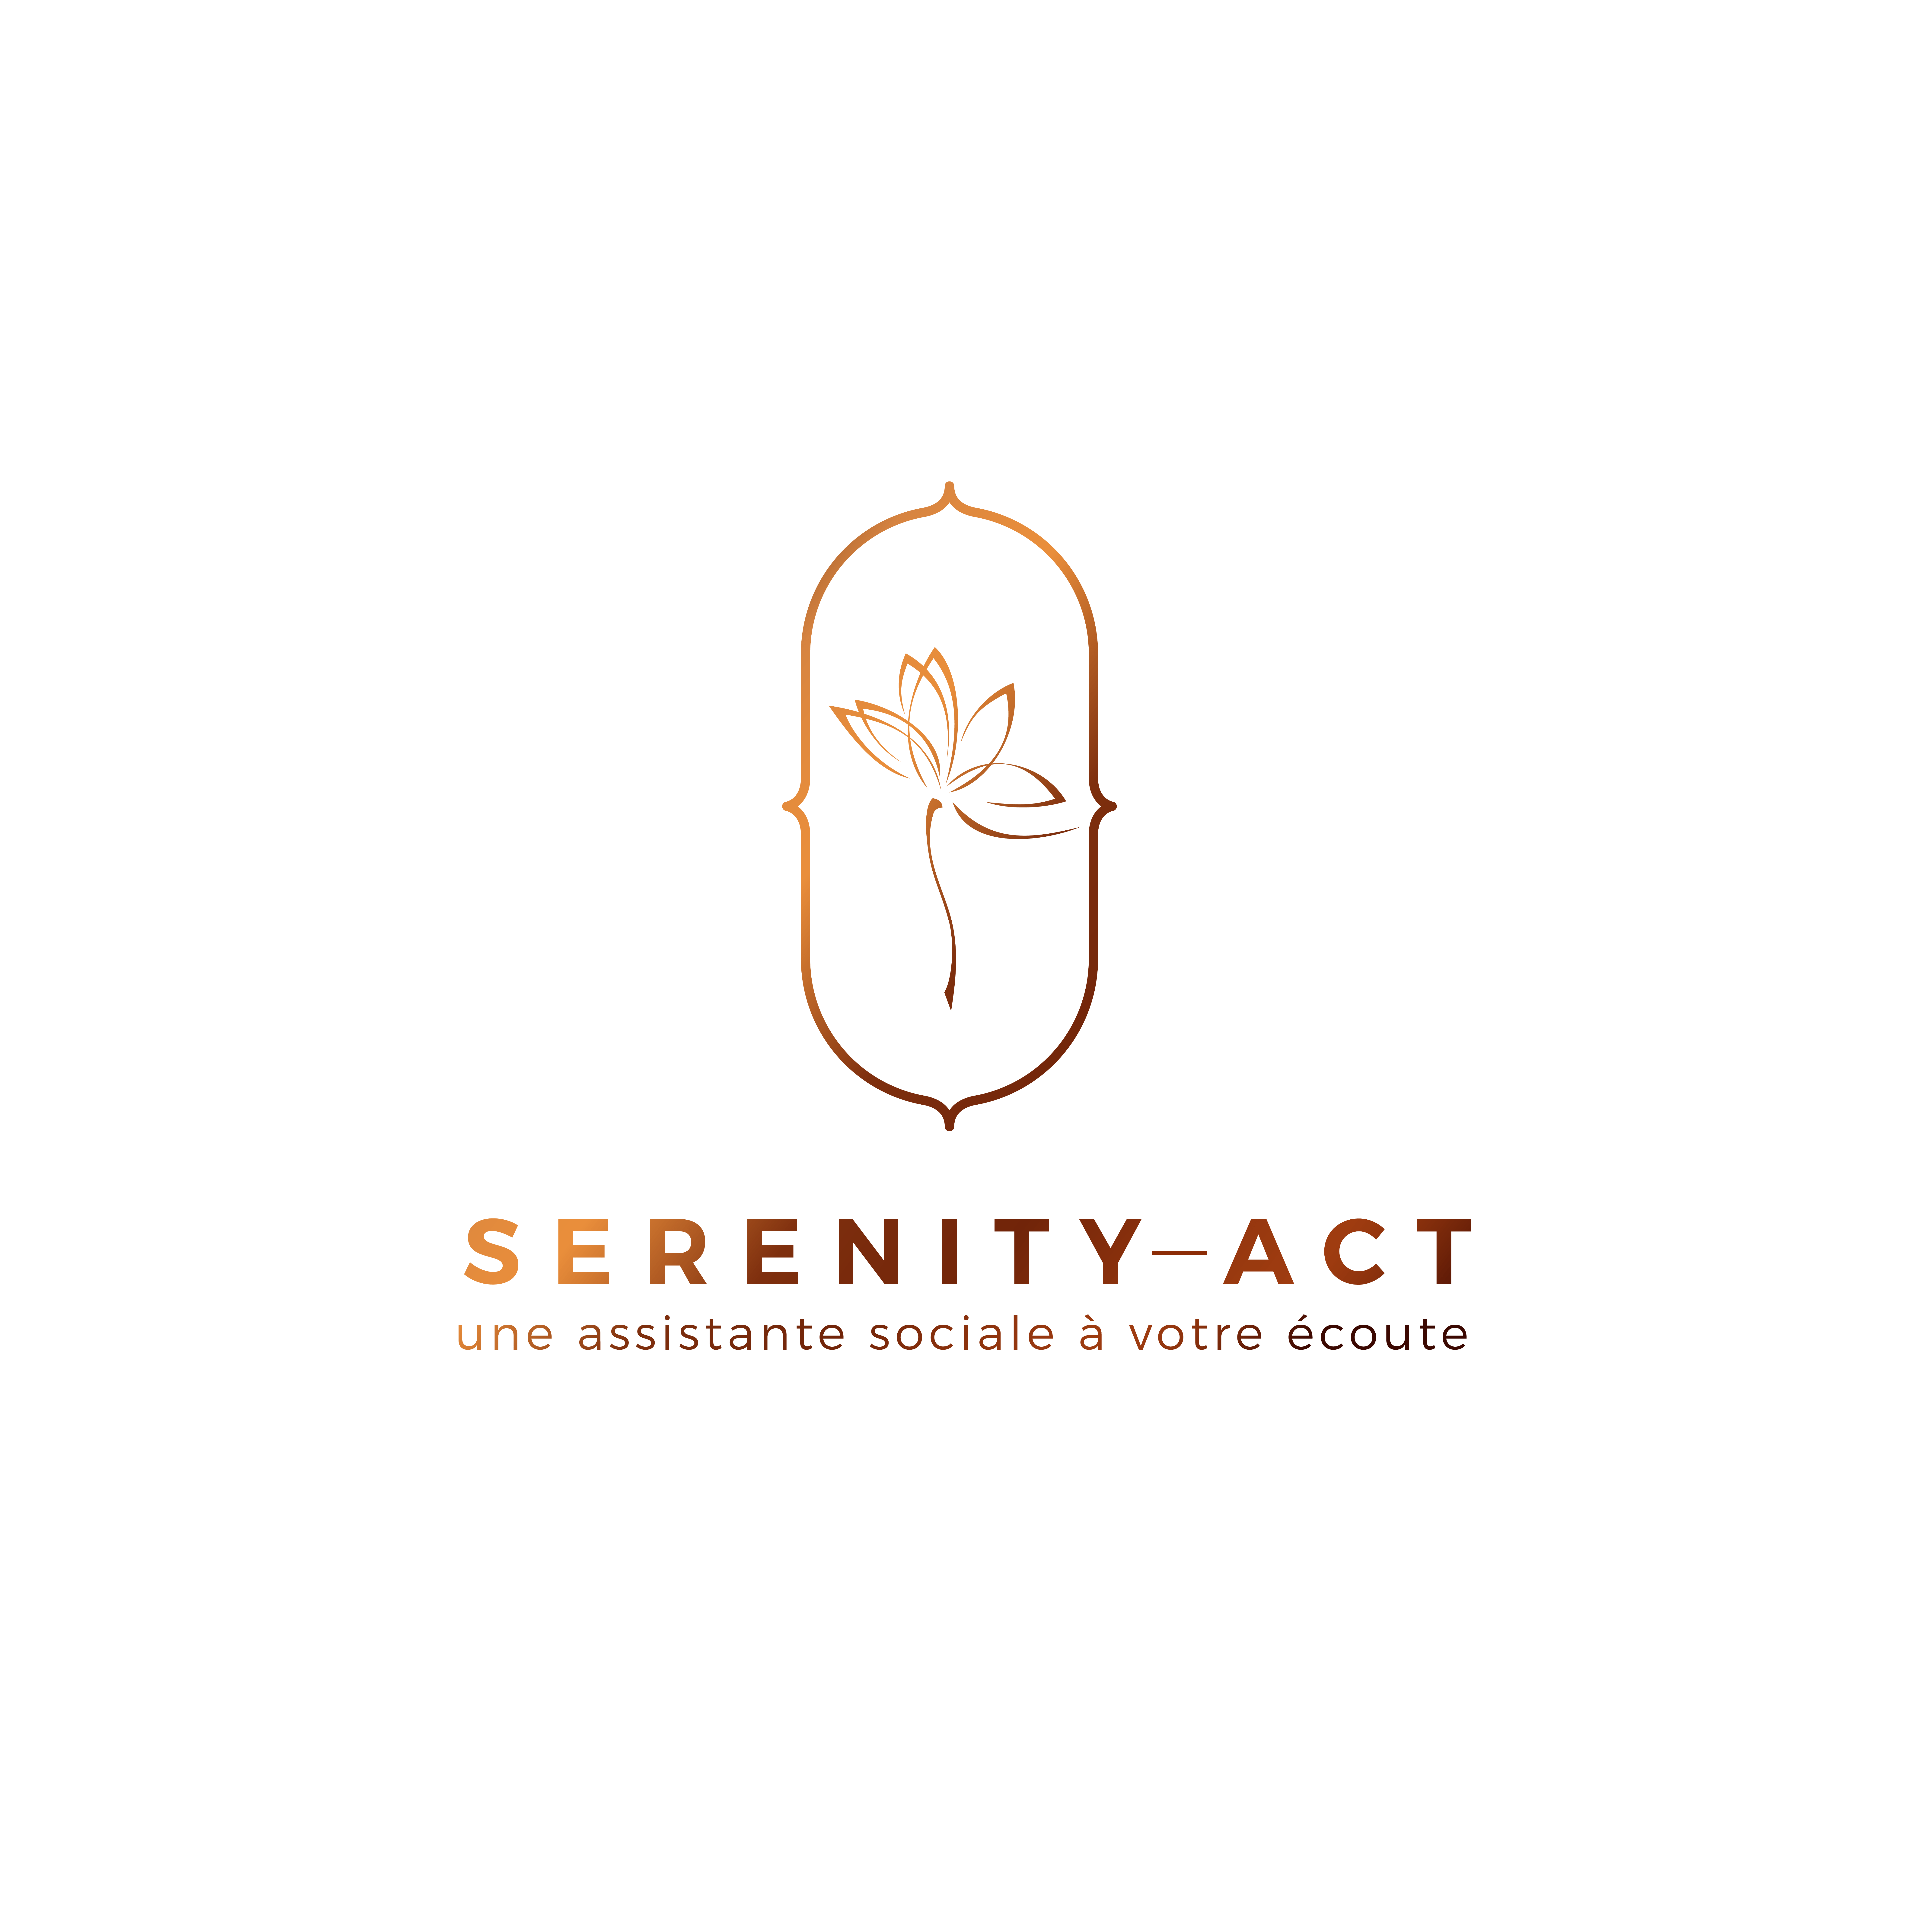 Serenity-act